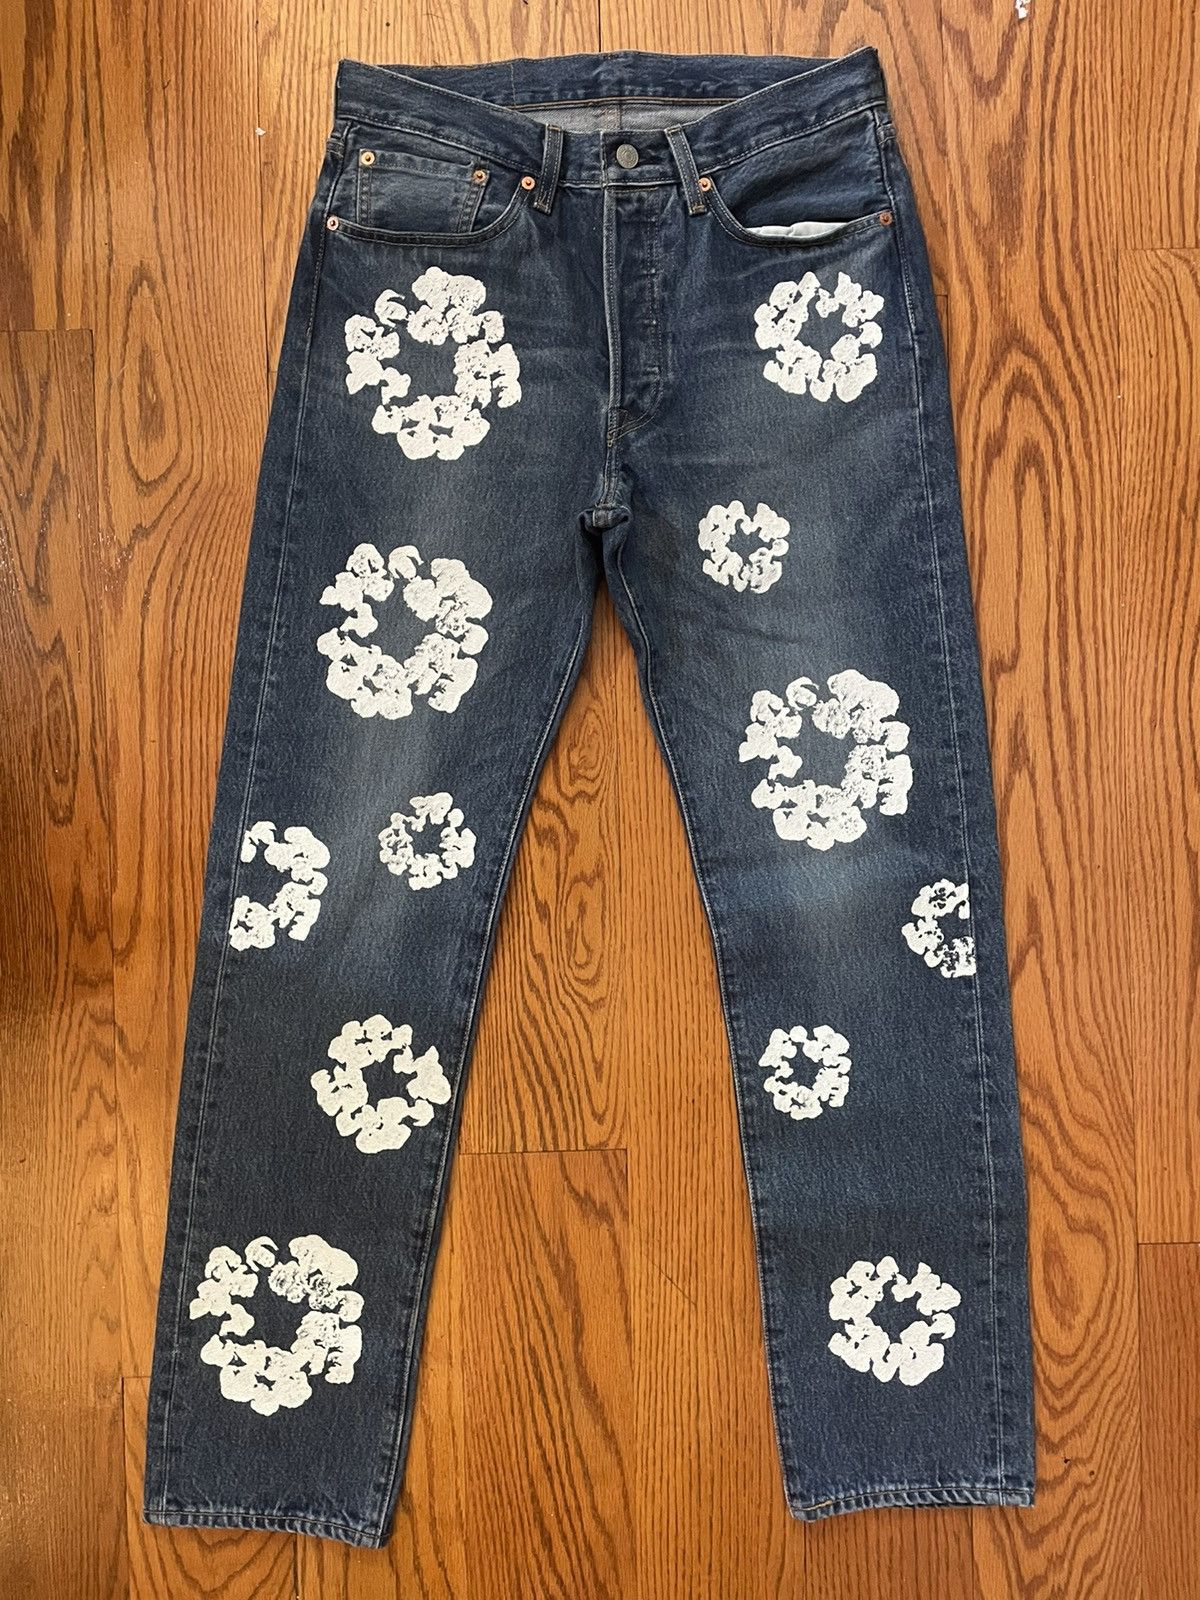 Levi's 501 Denim Tears Cotton Wreath Jeans Dark Wash 33x32 | Grailed